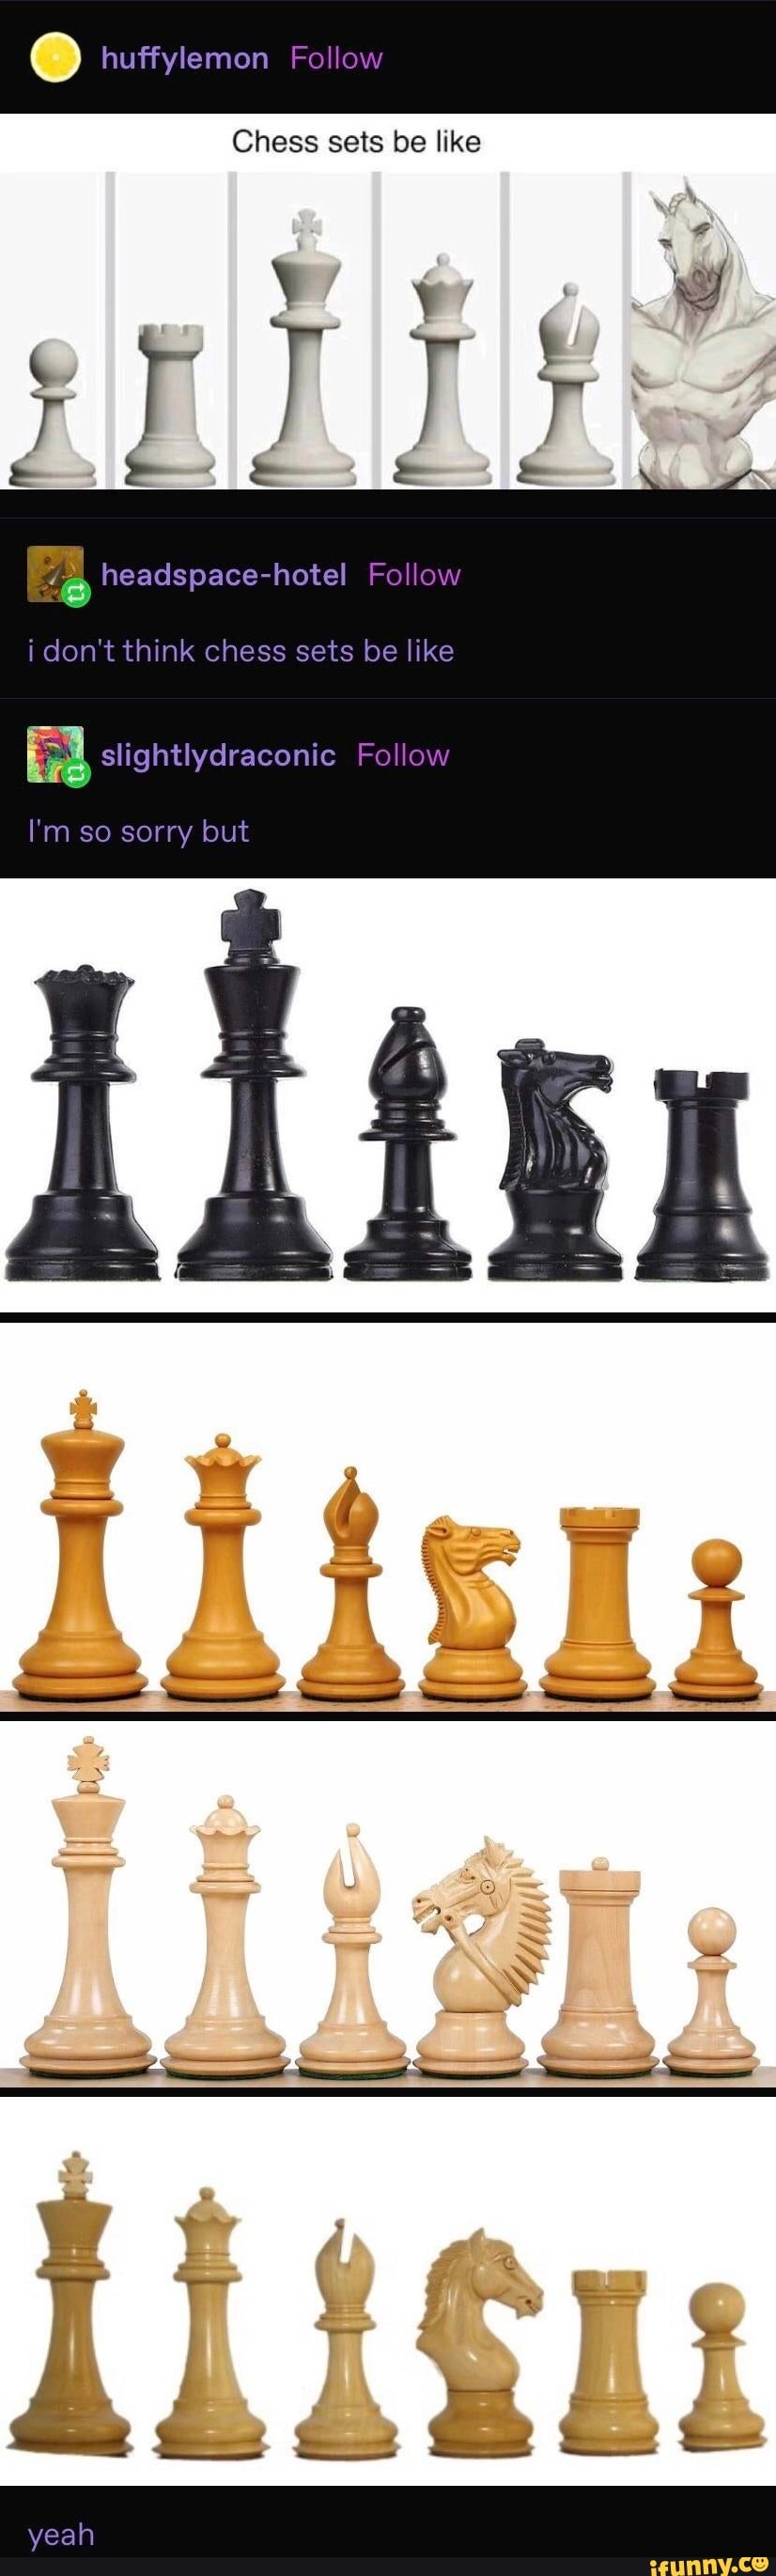 Huffylemon Follow Chess sets be like Lo headspace-hotel i don't